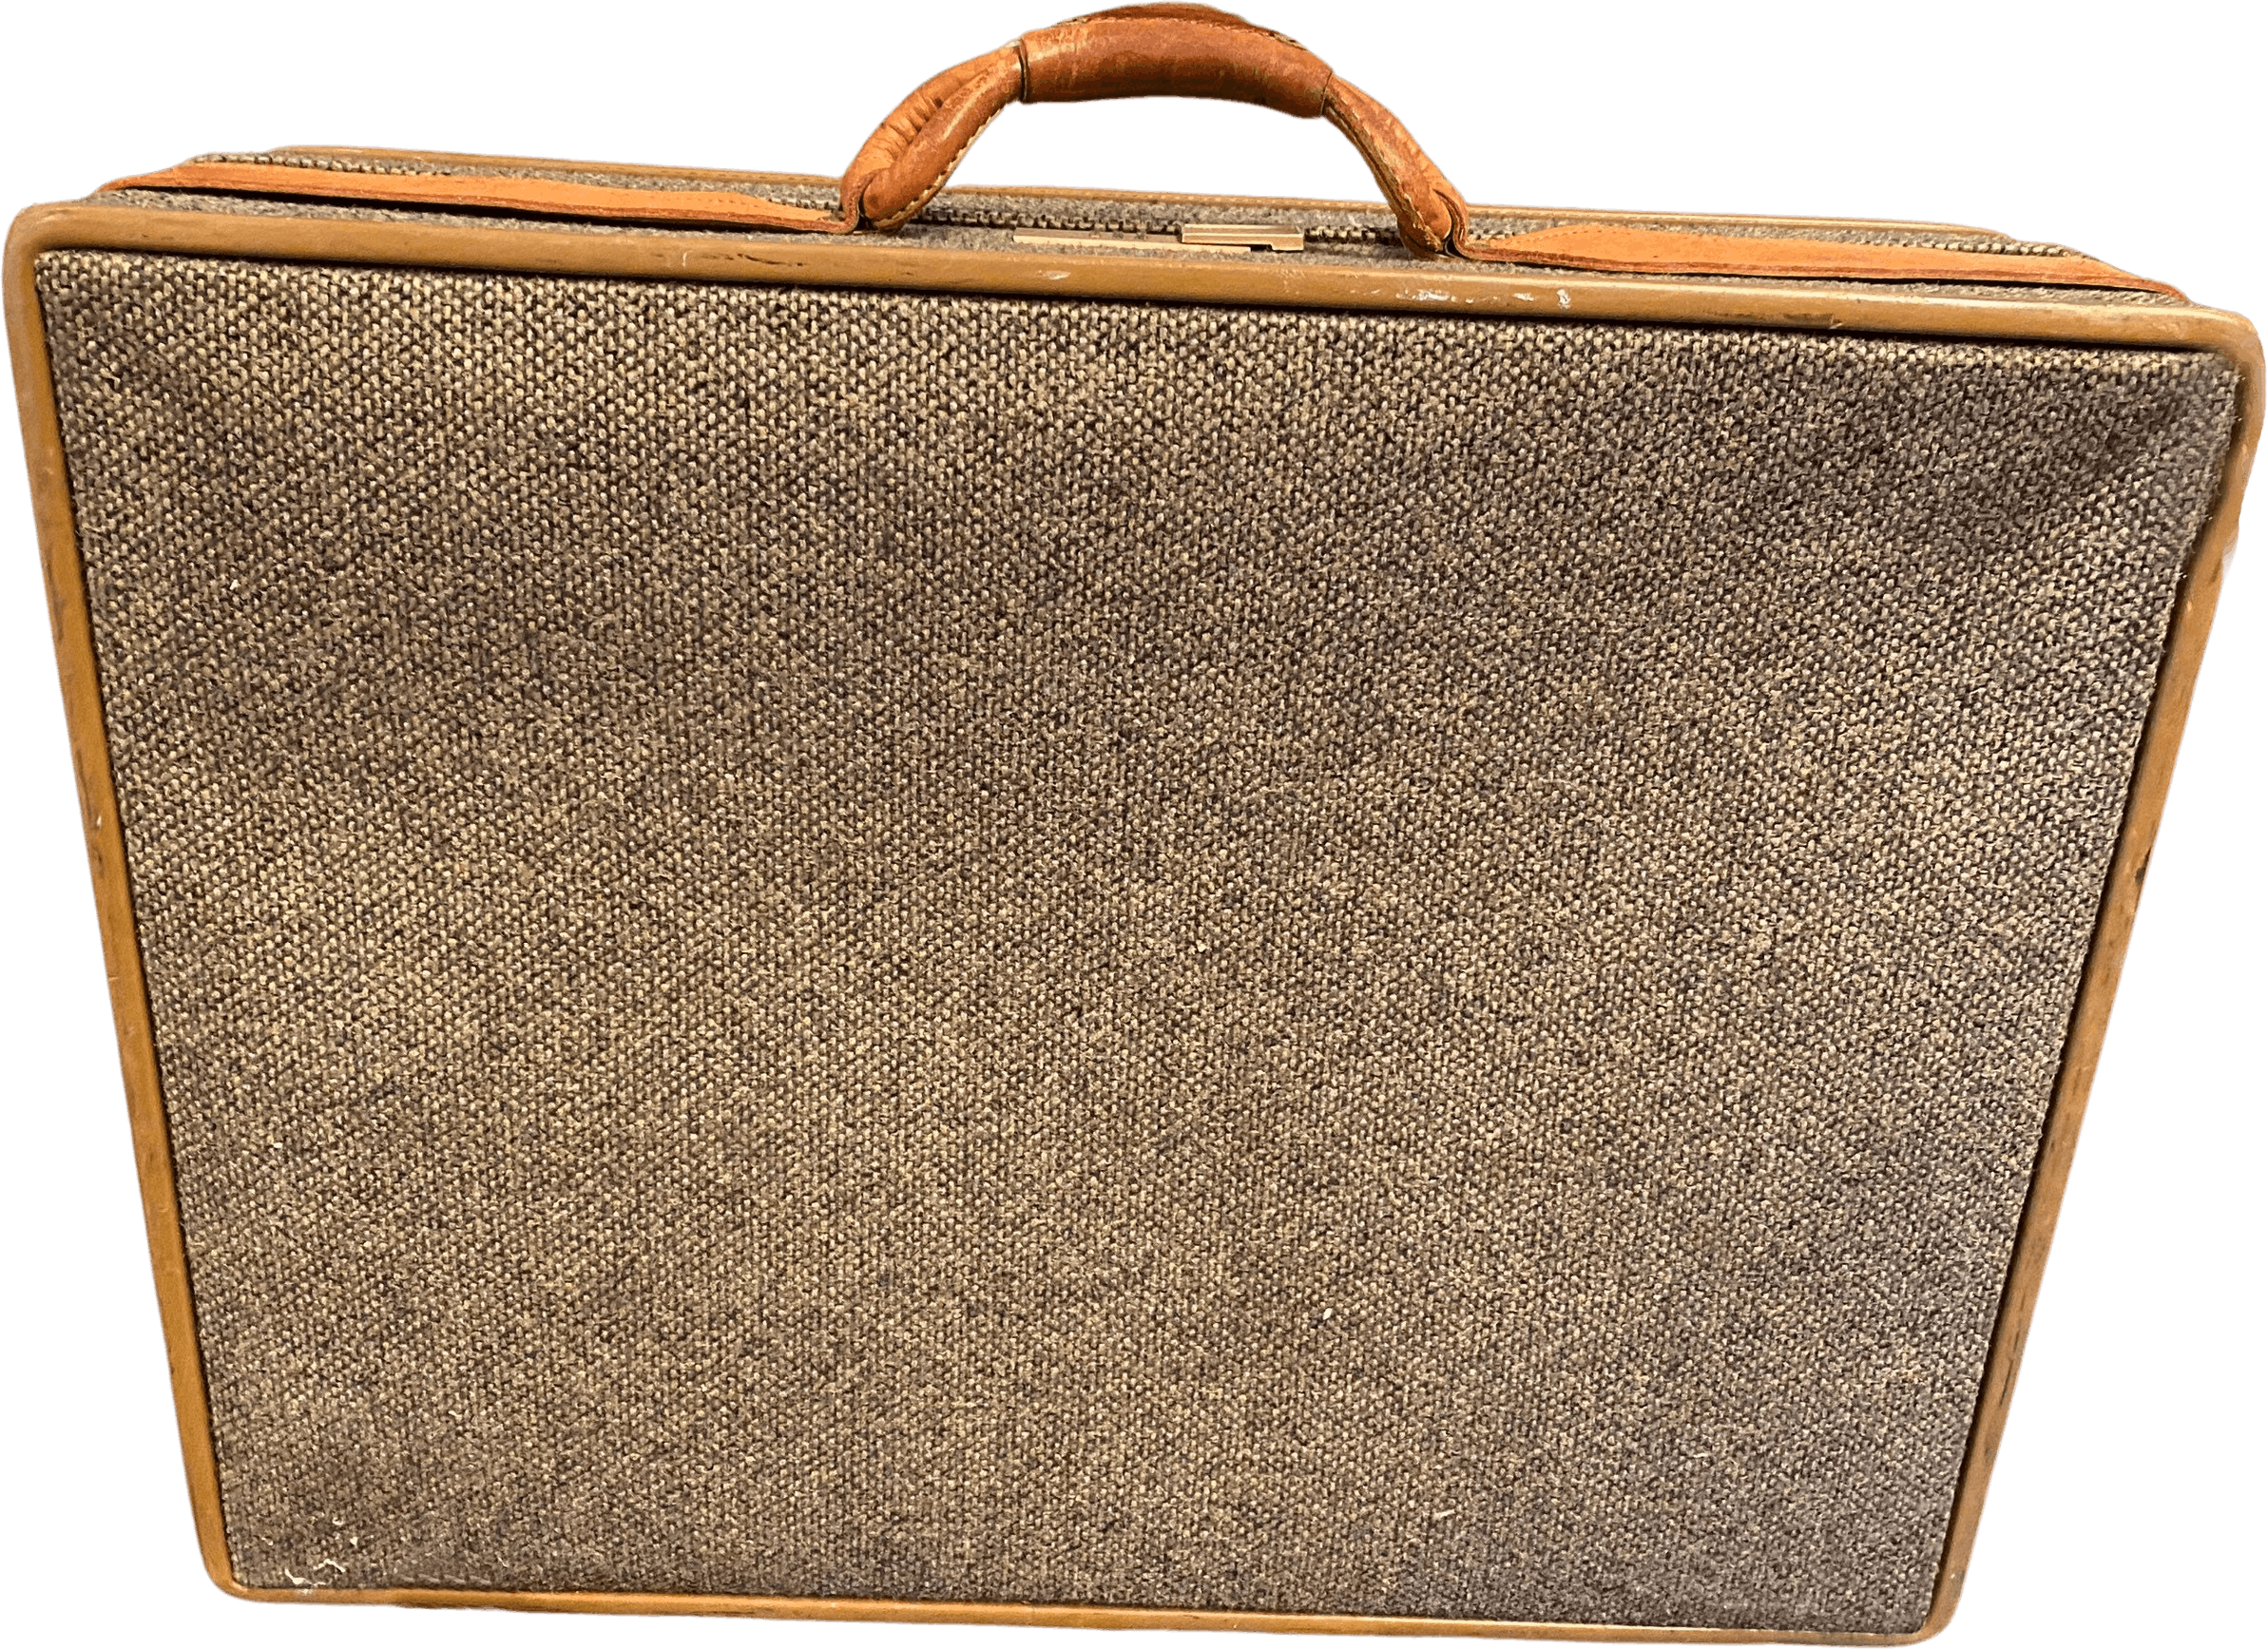 hartmann luggage vintage